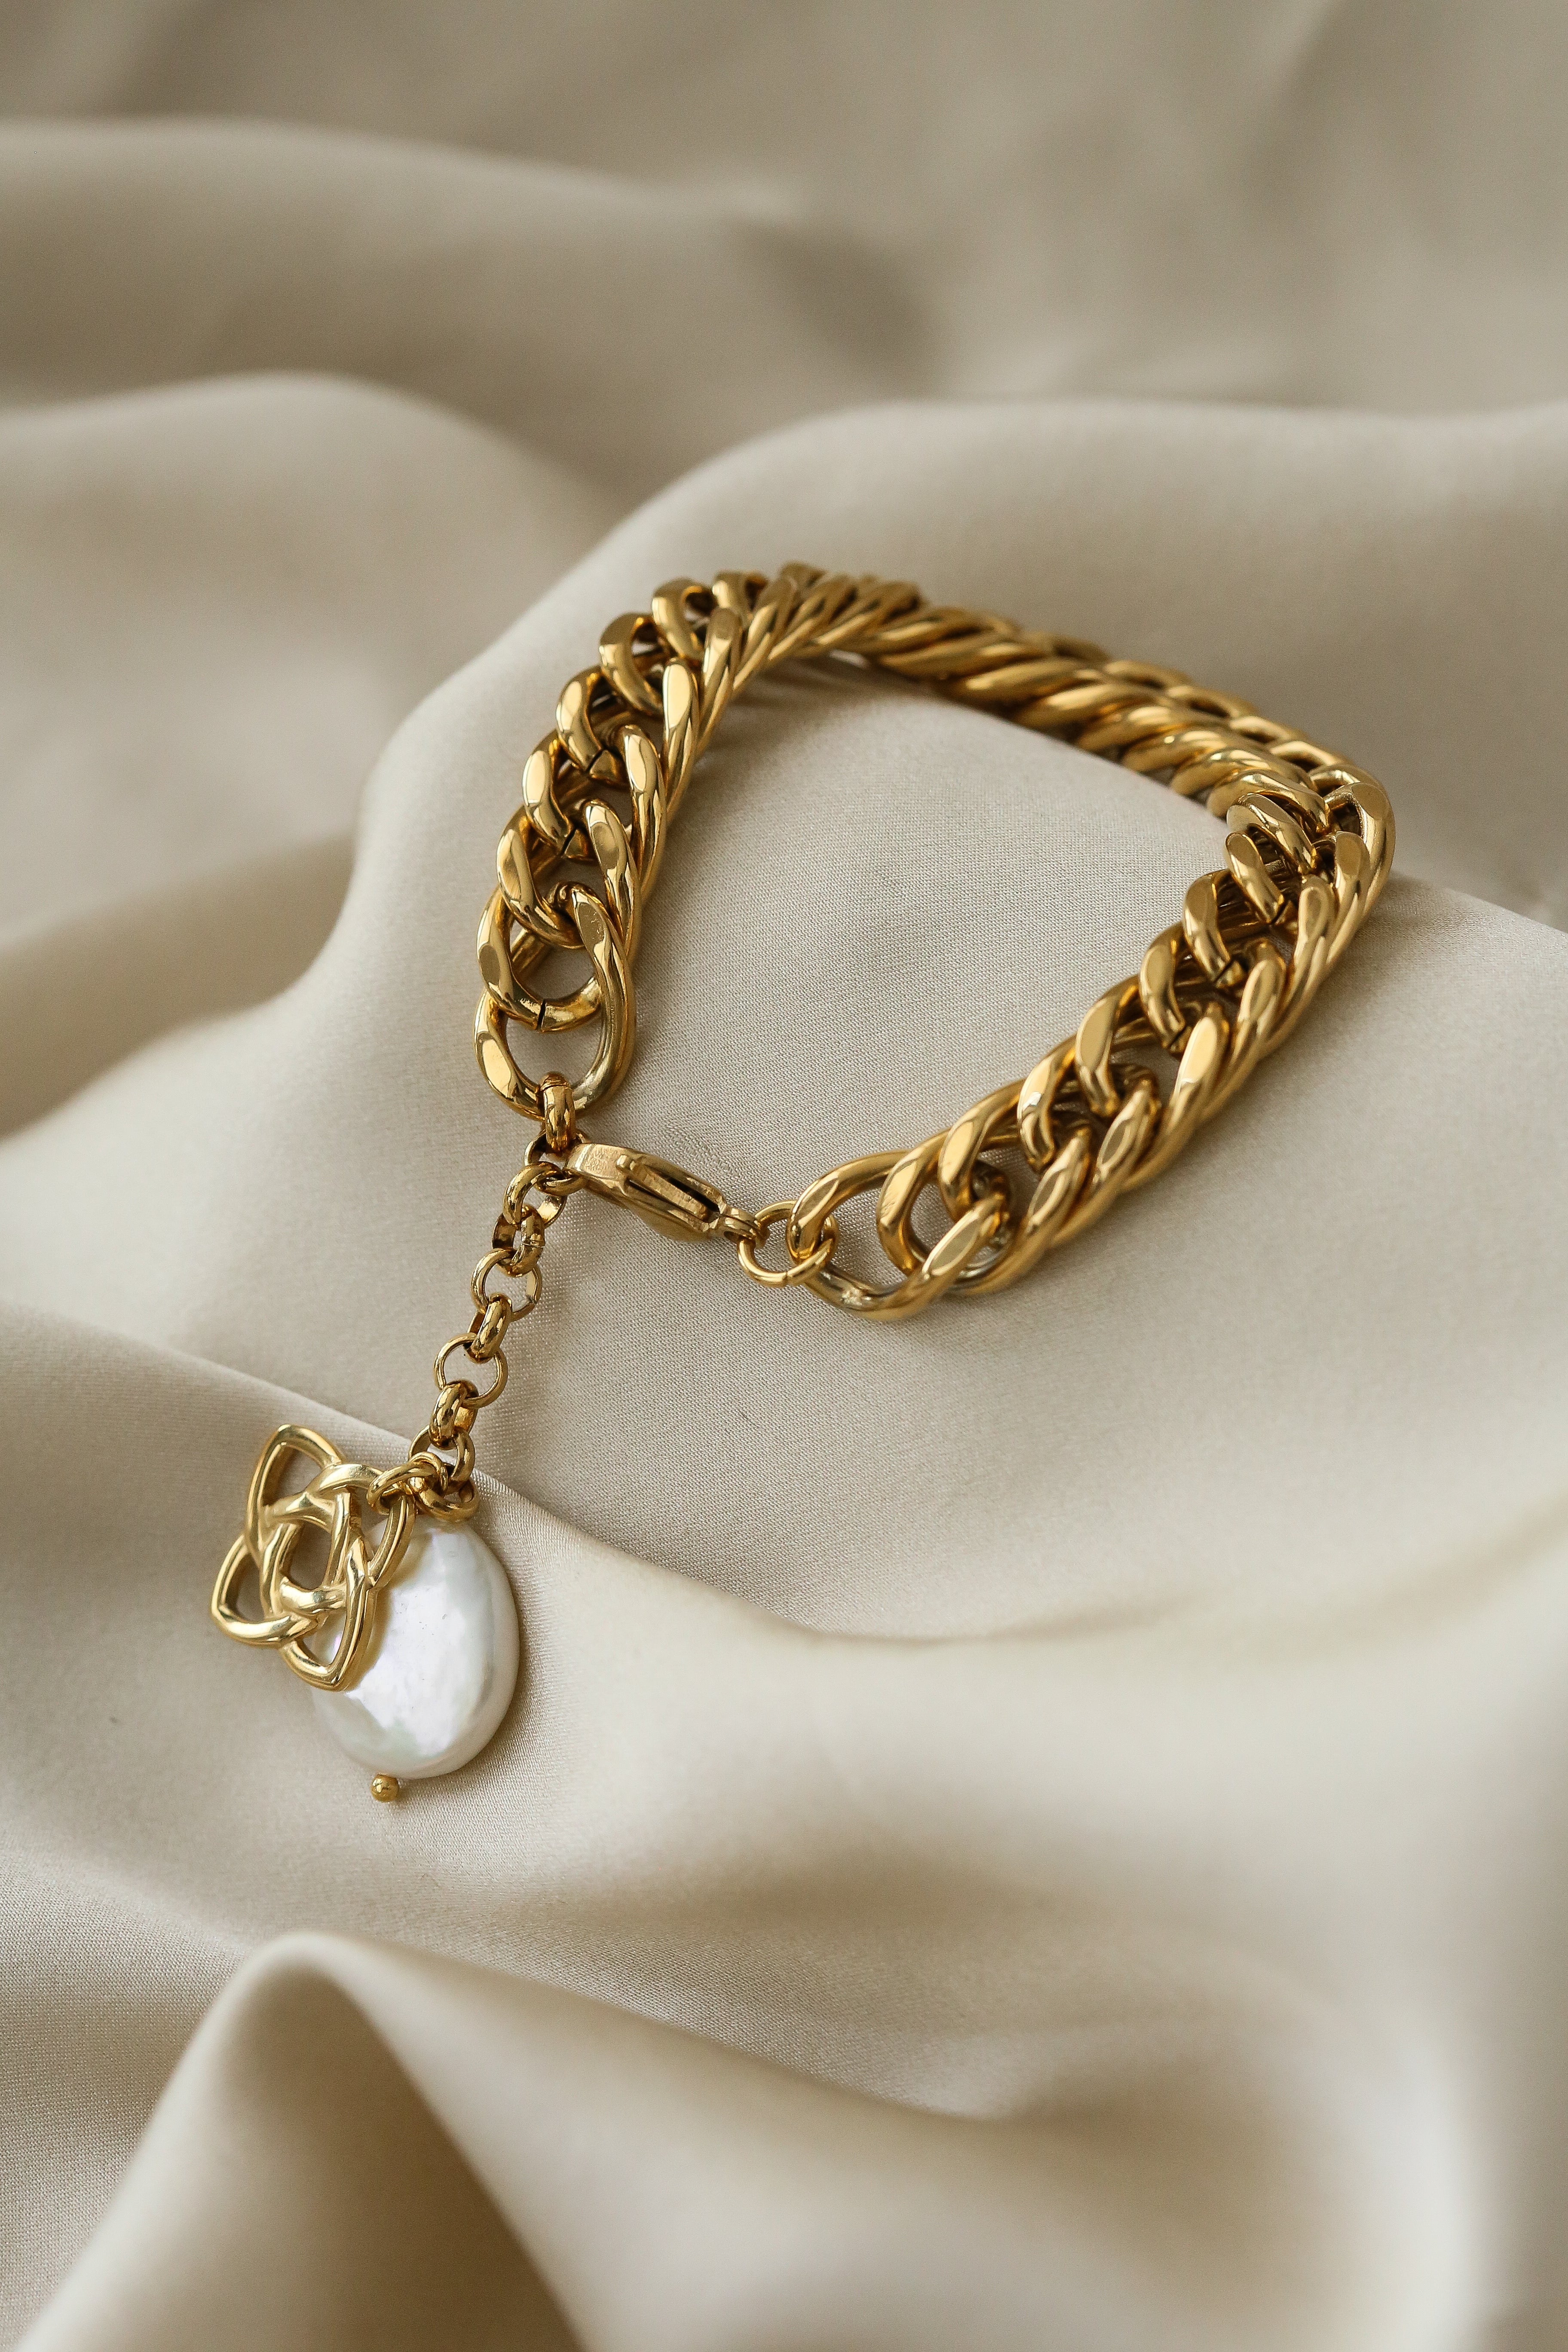 Winona Bracelet - Boutique Minimaliste has waterproof, durable, elegant and vintage inspired jewelry